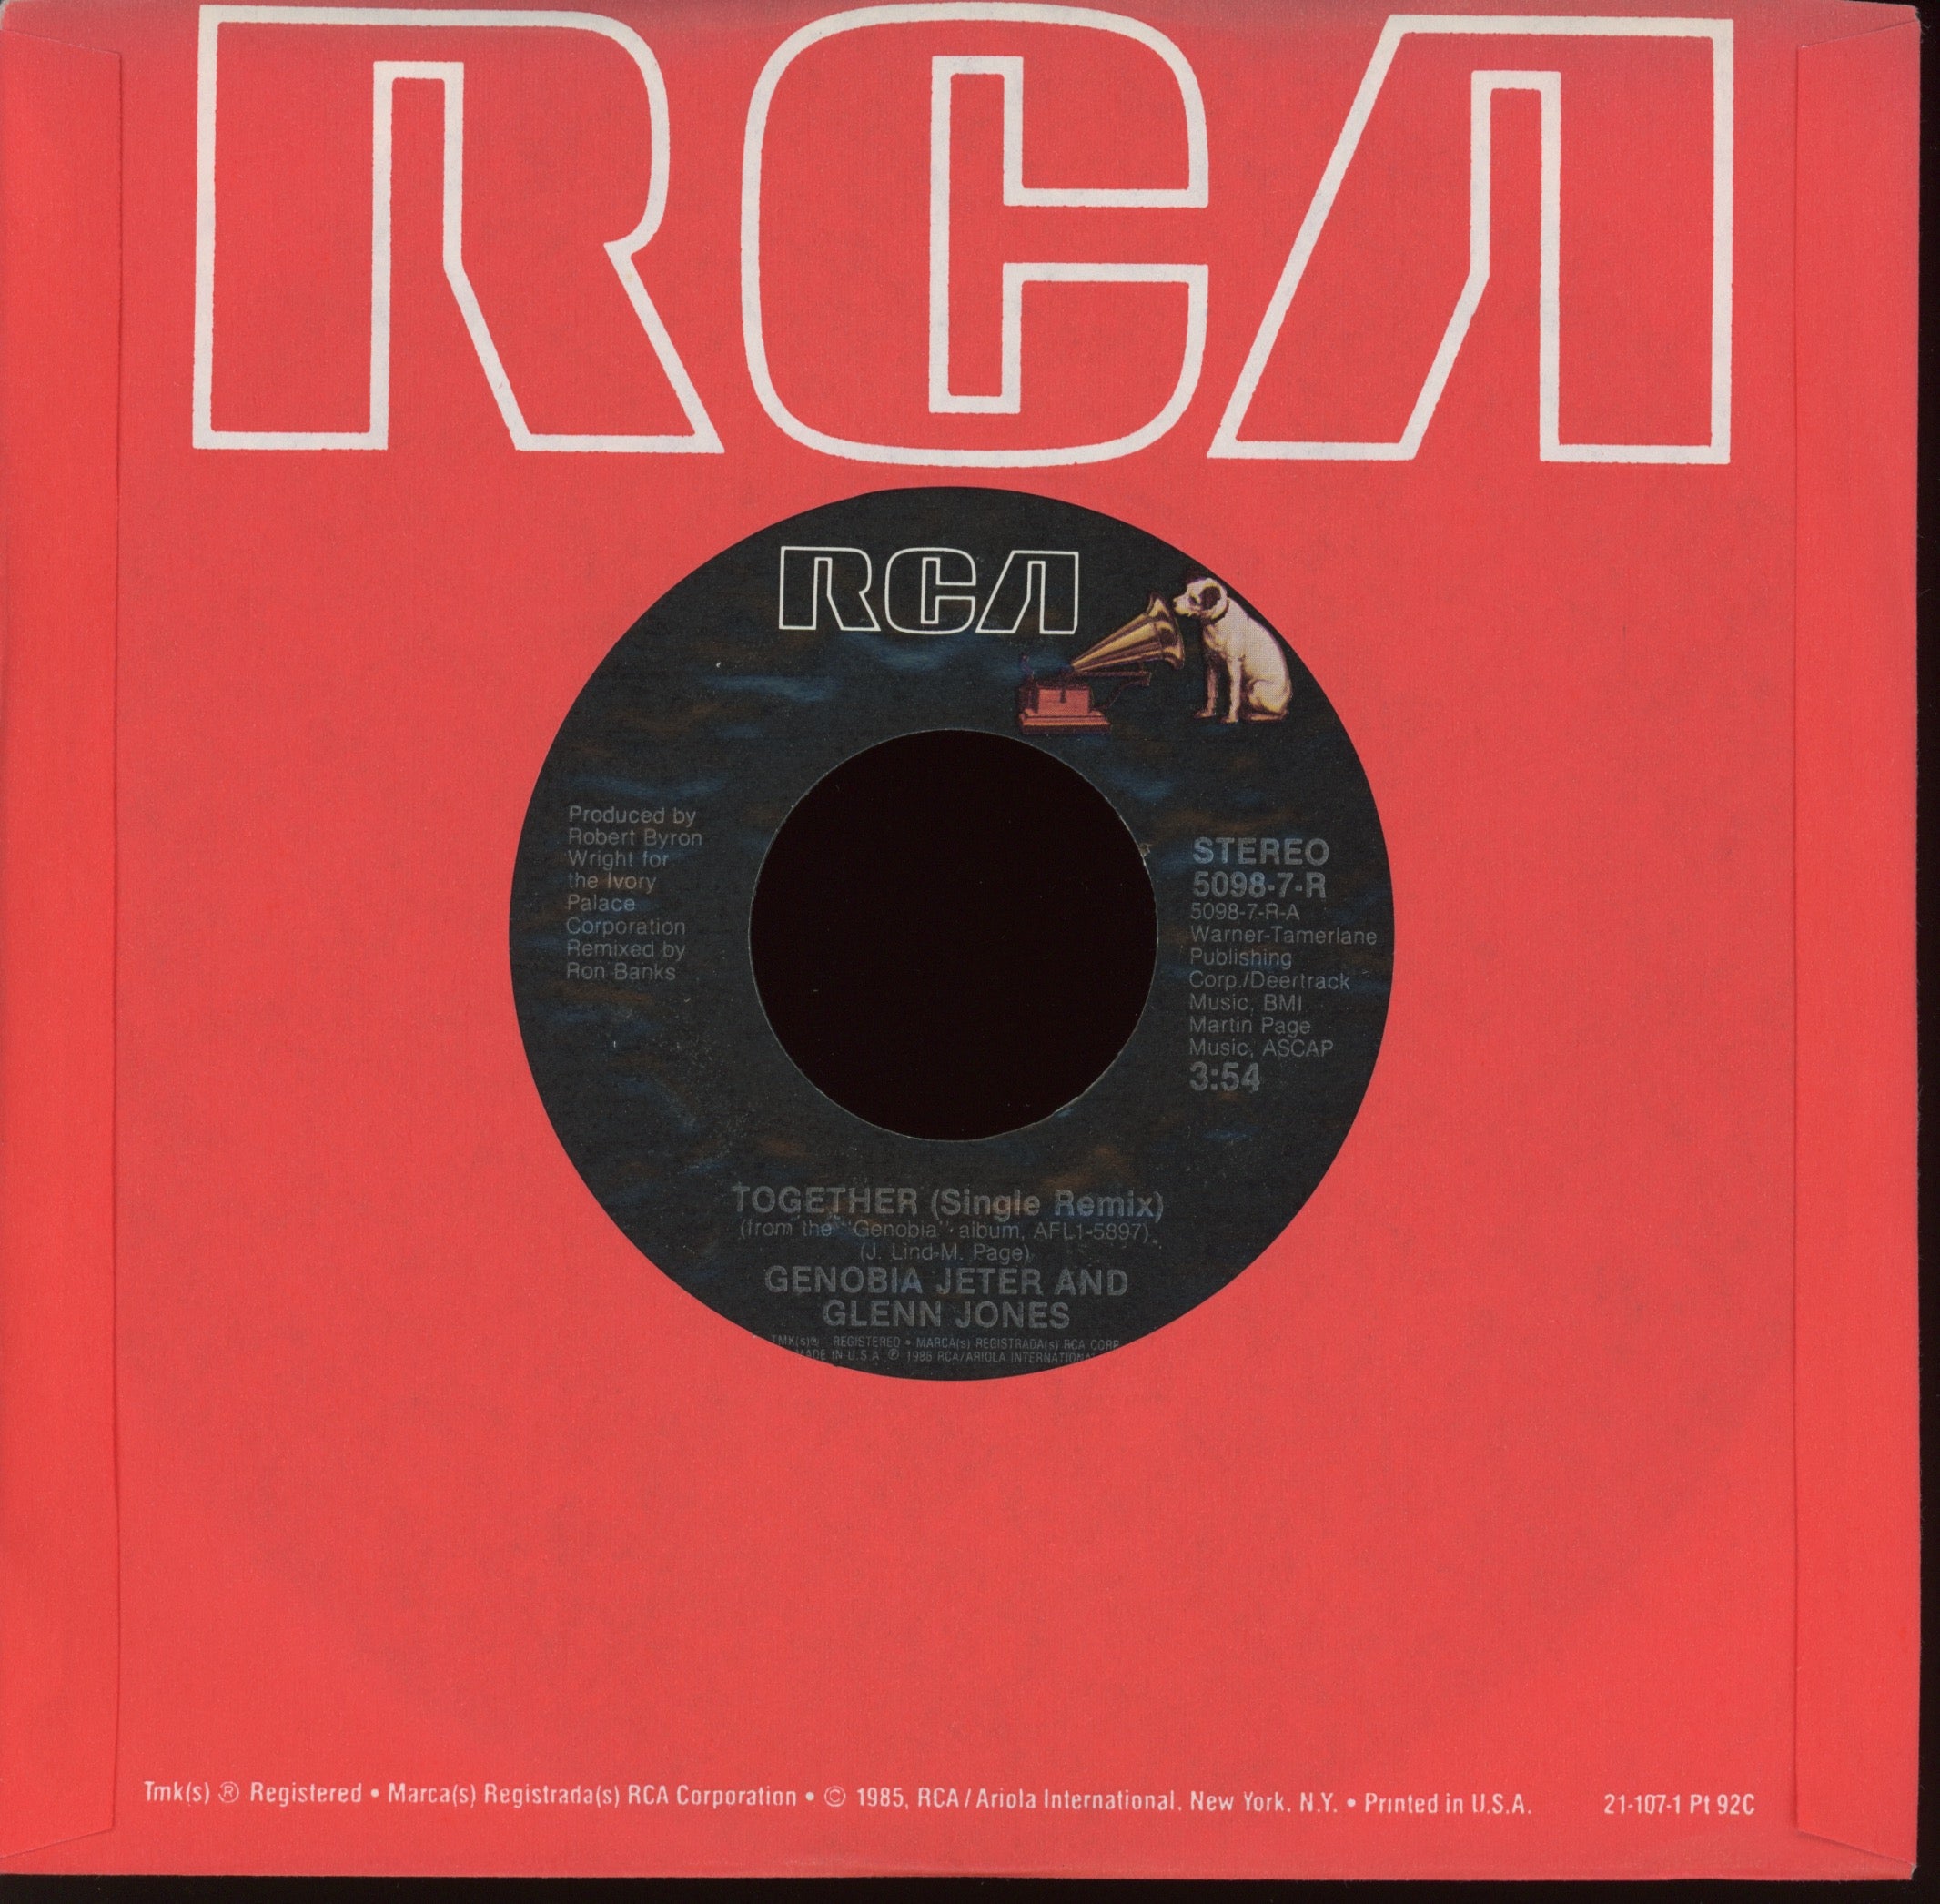 Glenn Jones - Keep On Doin' on RCA